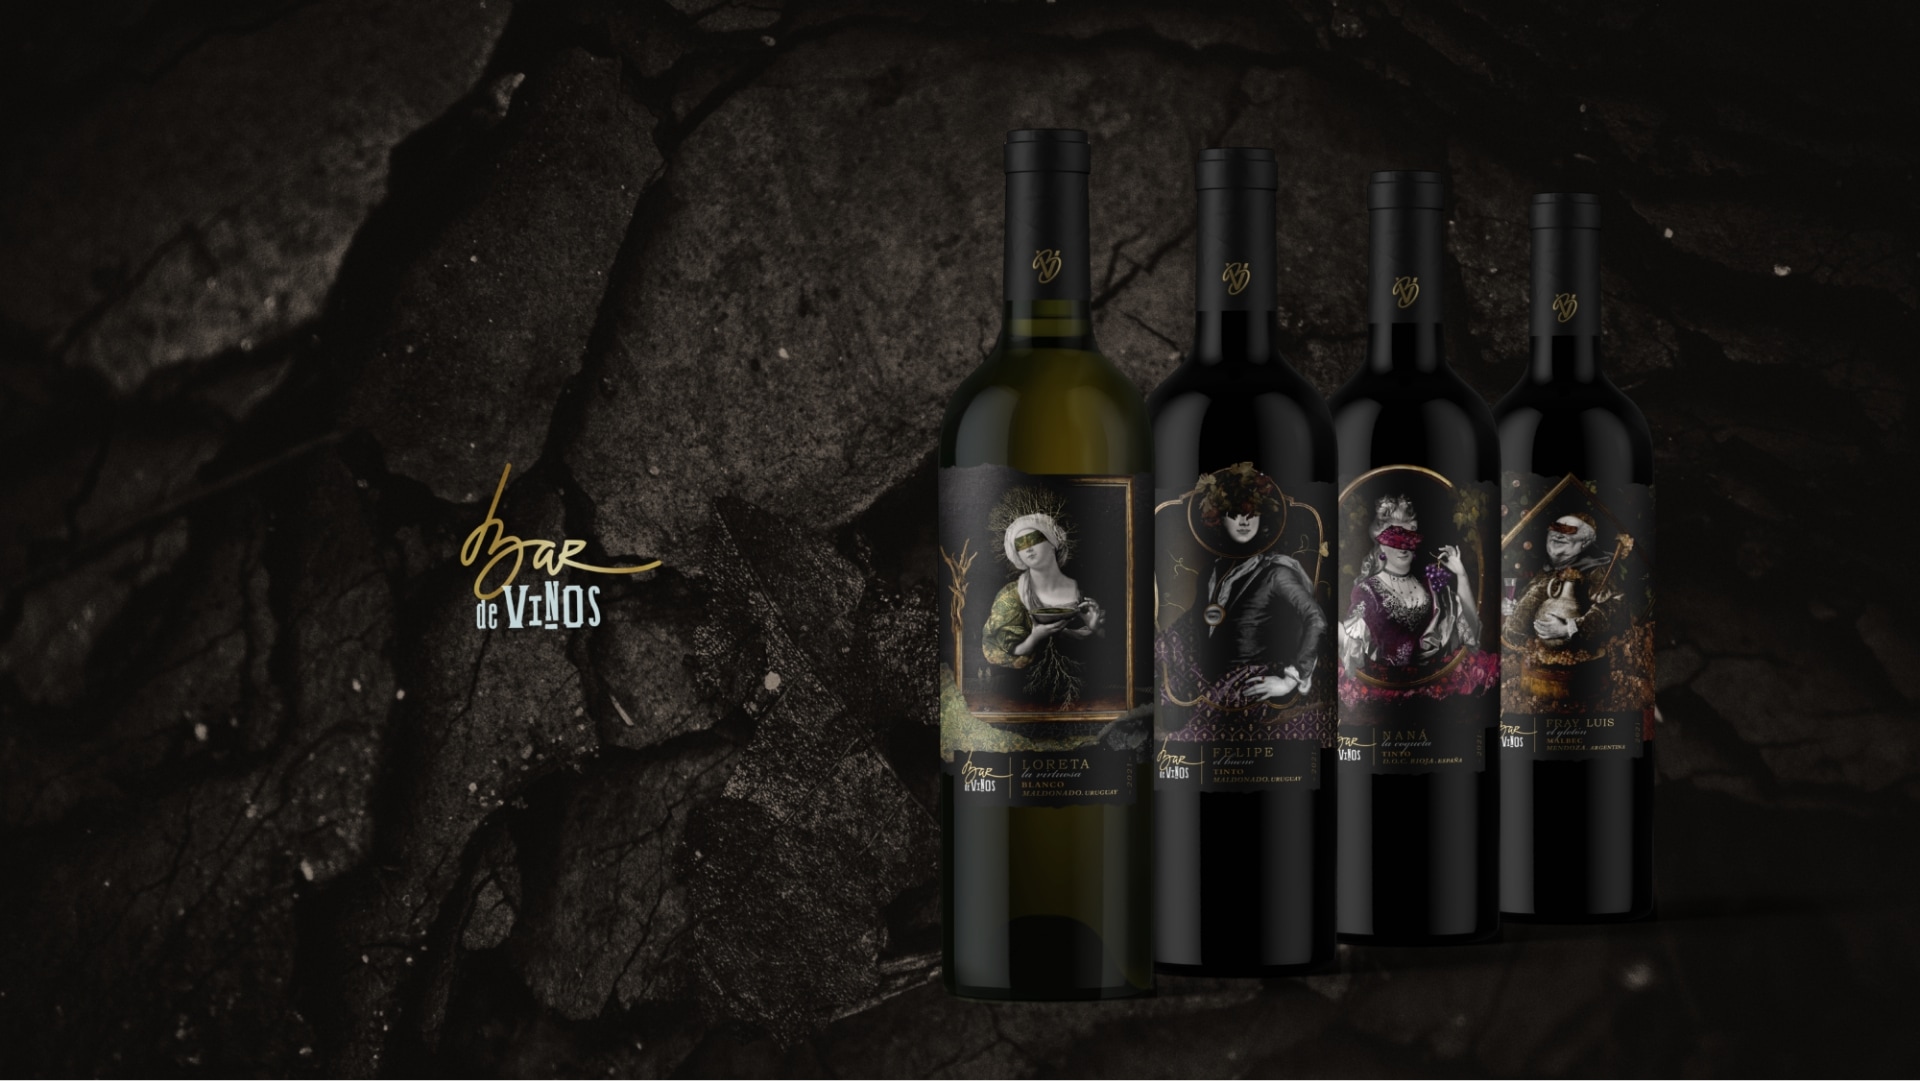 Argo etiquetas vino Bar de Vinos